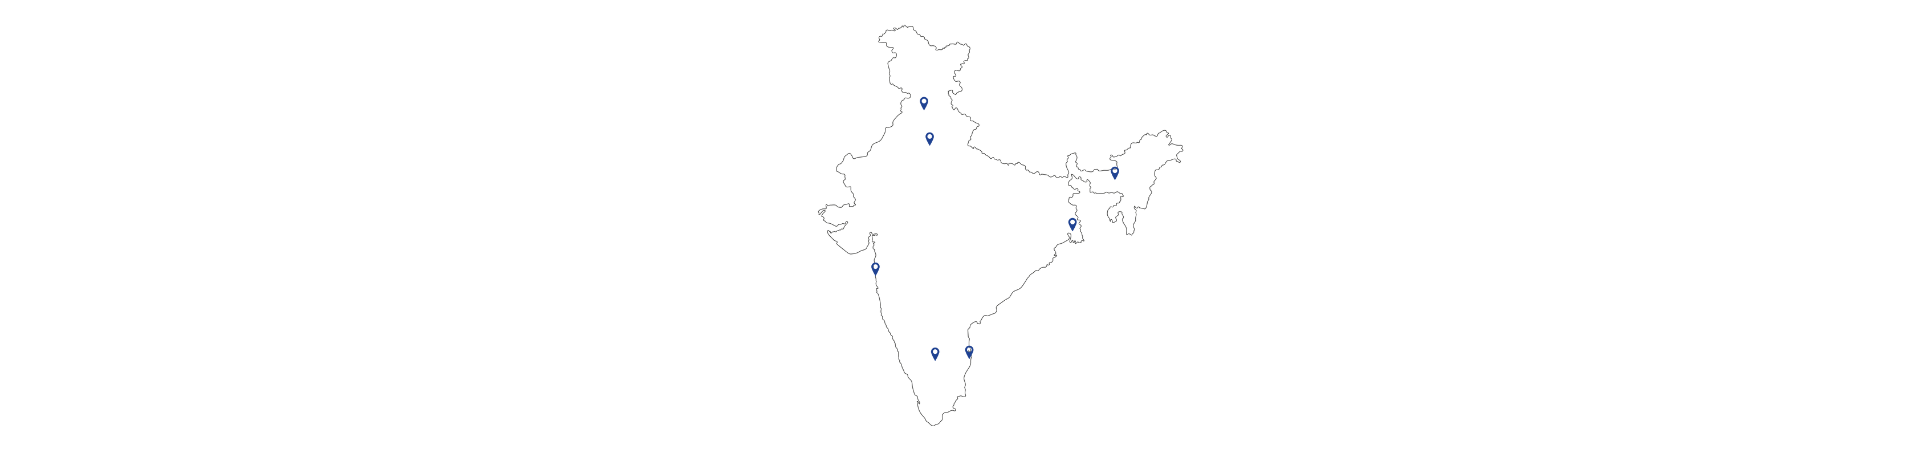 Skanem India Locations Map